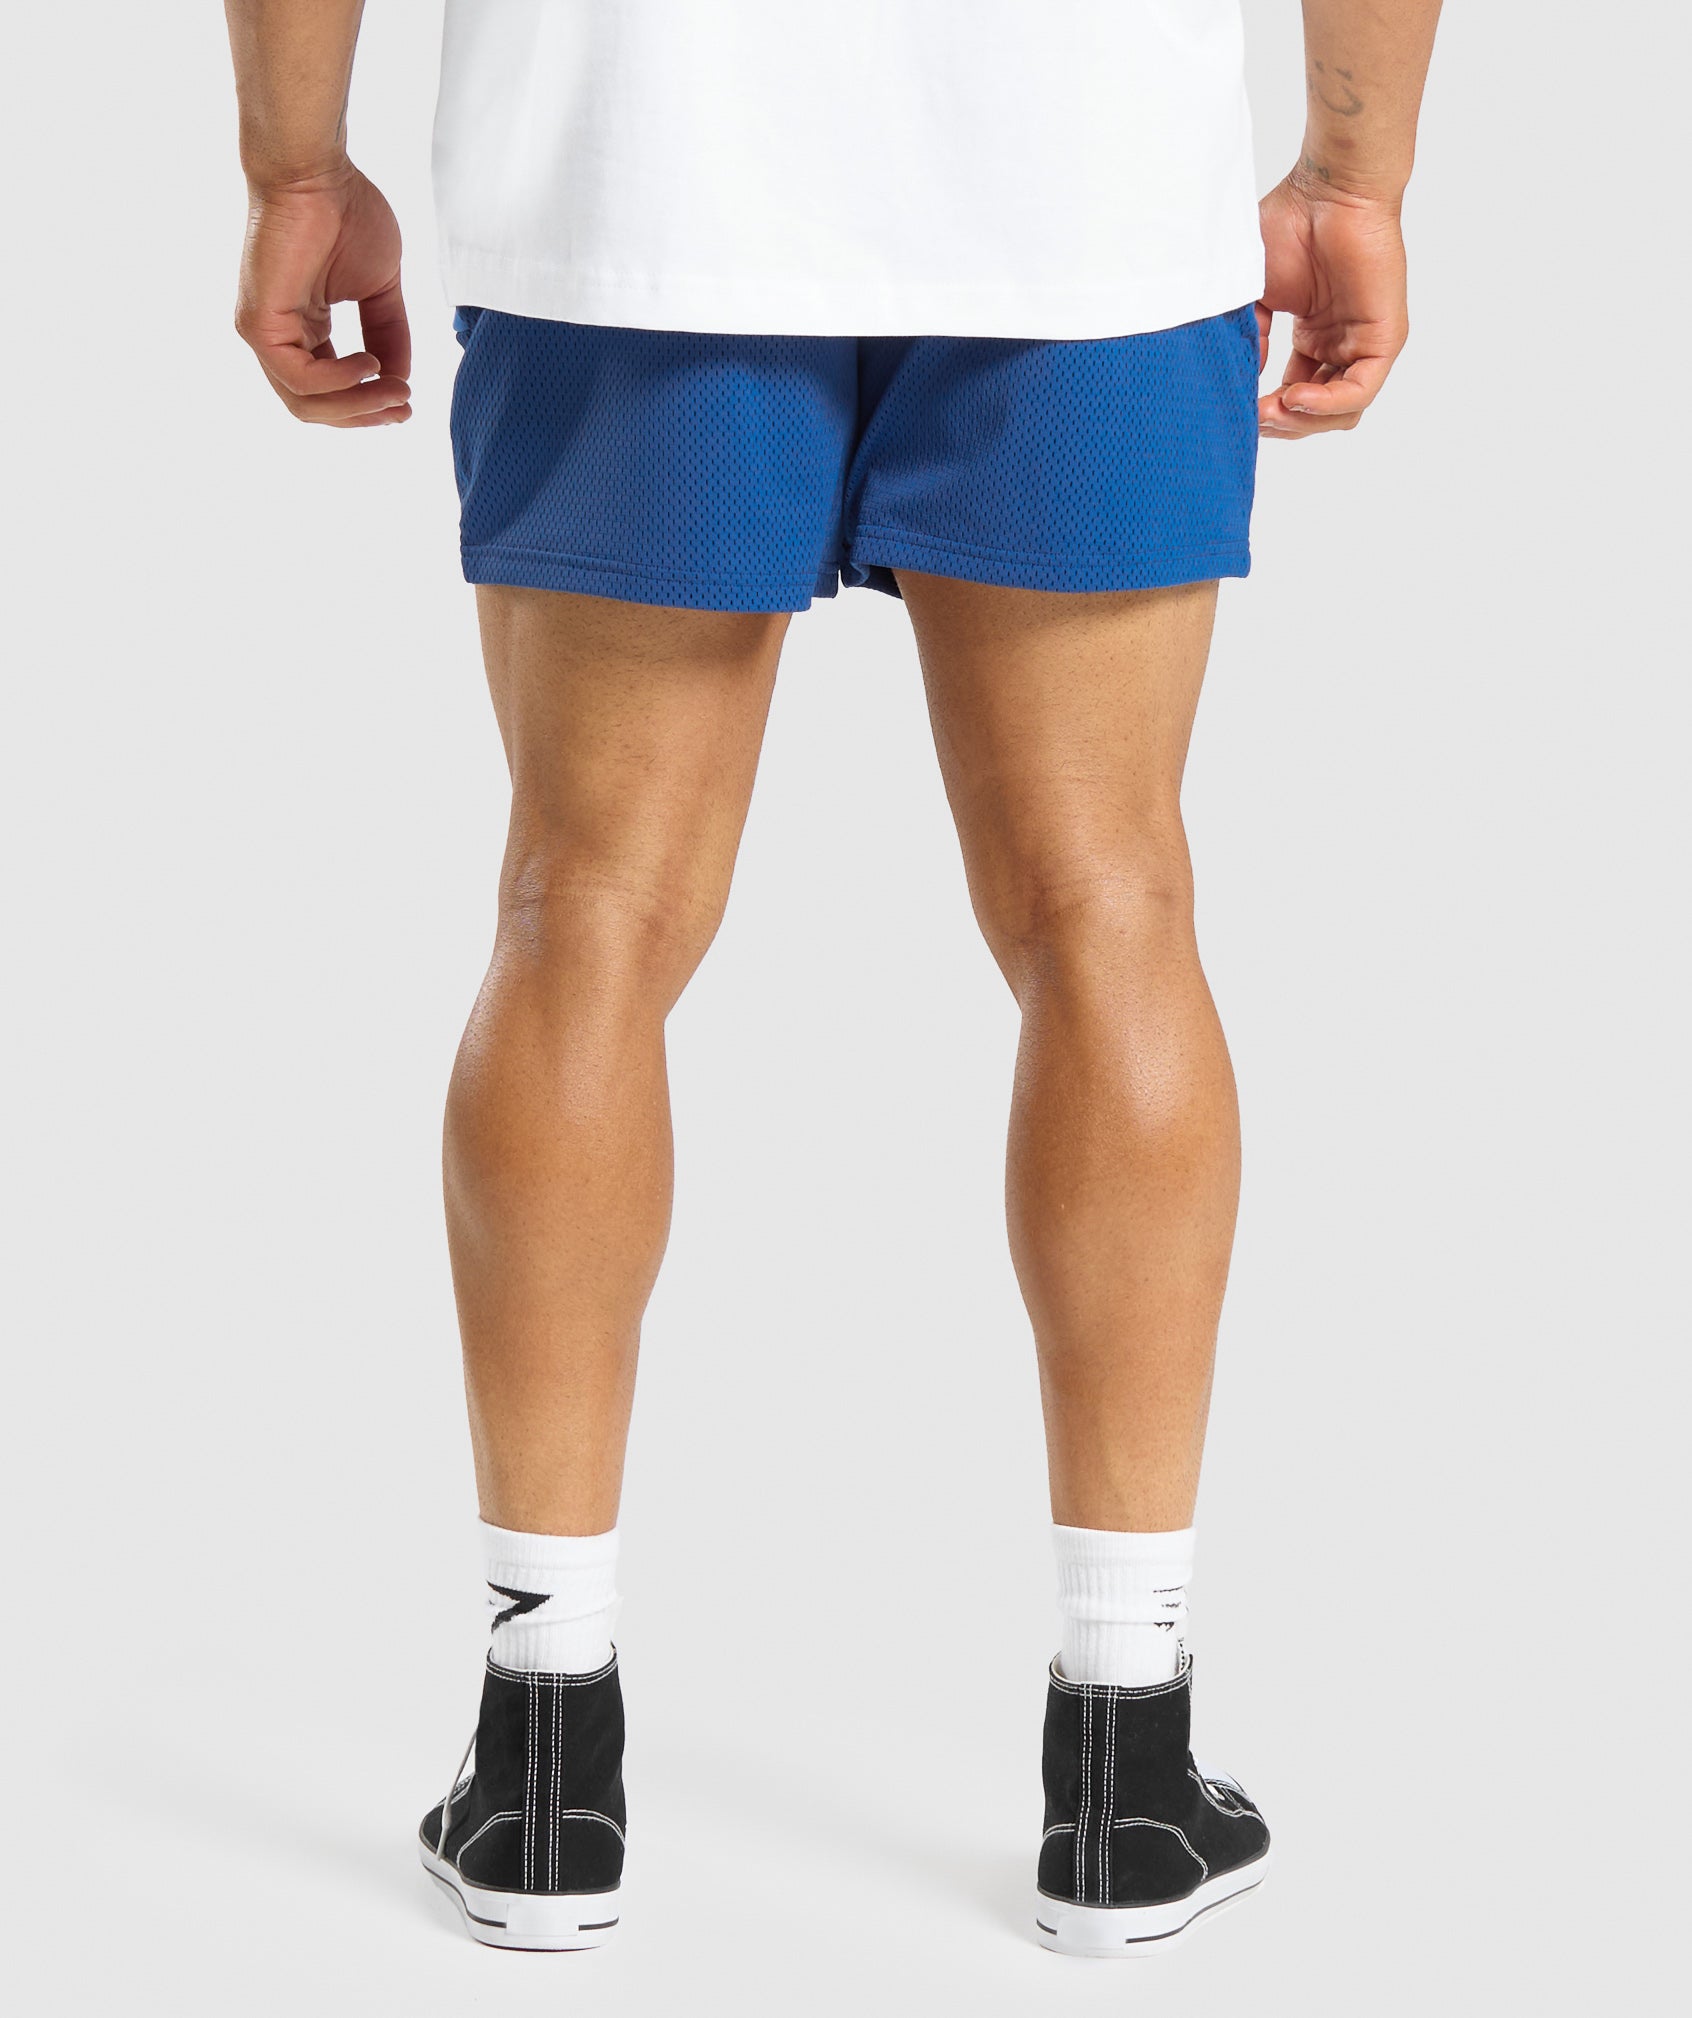 Brandmark Mesh 5" Shorts in Wave Blue/Iris Blue - view 2